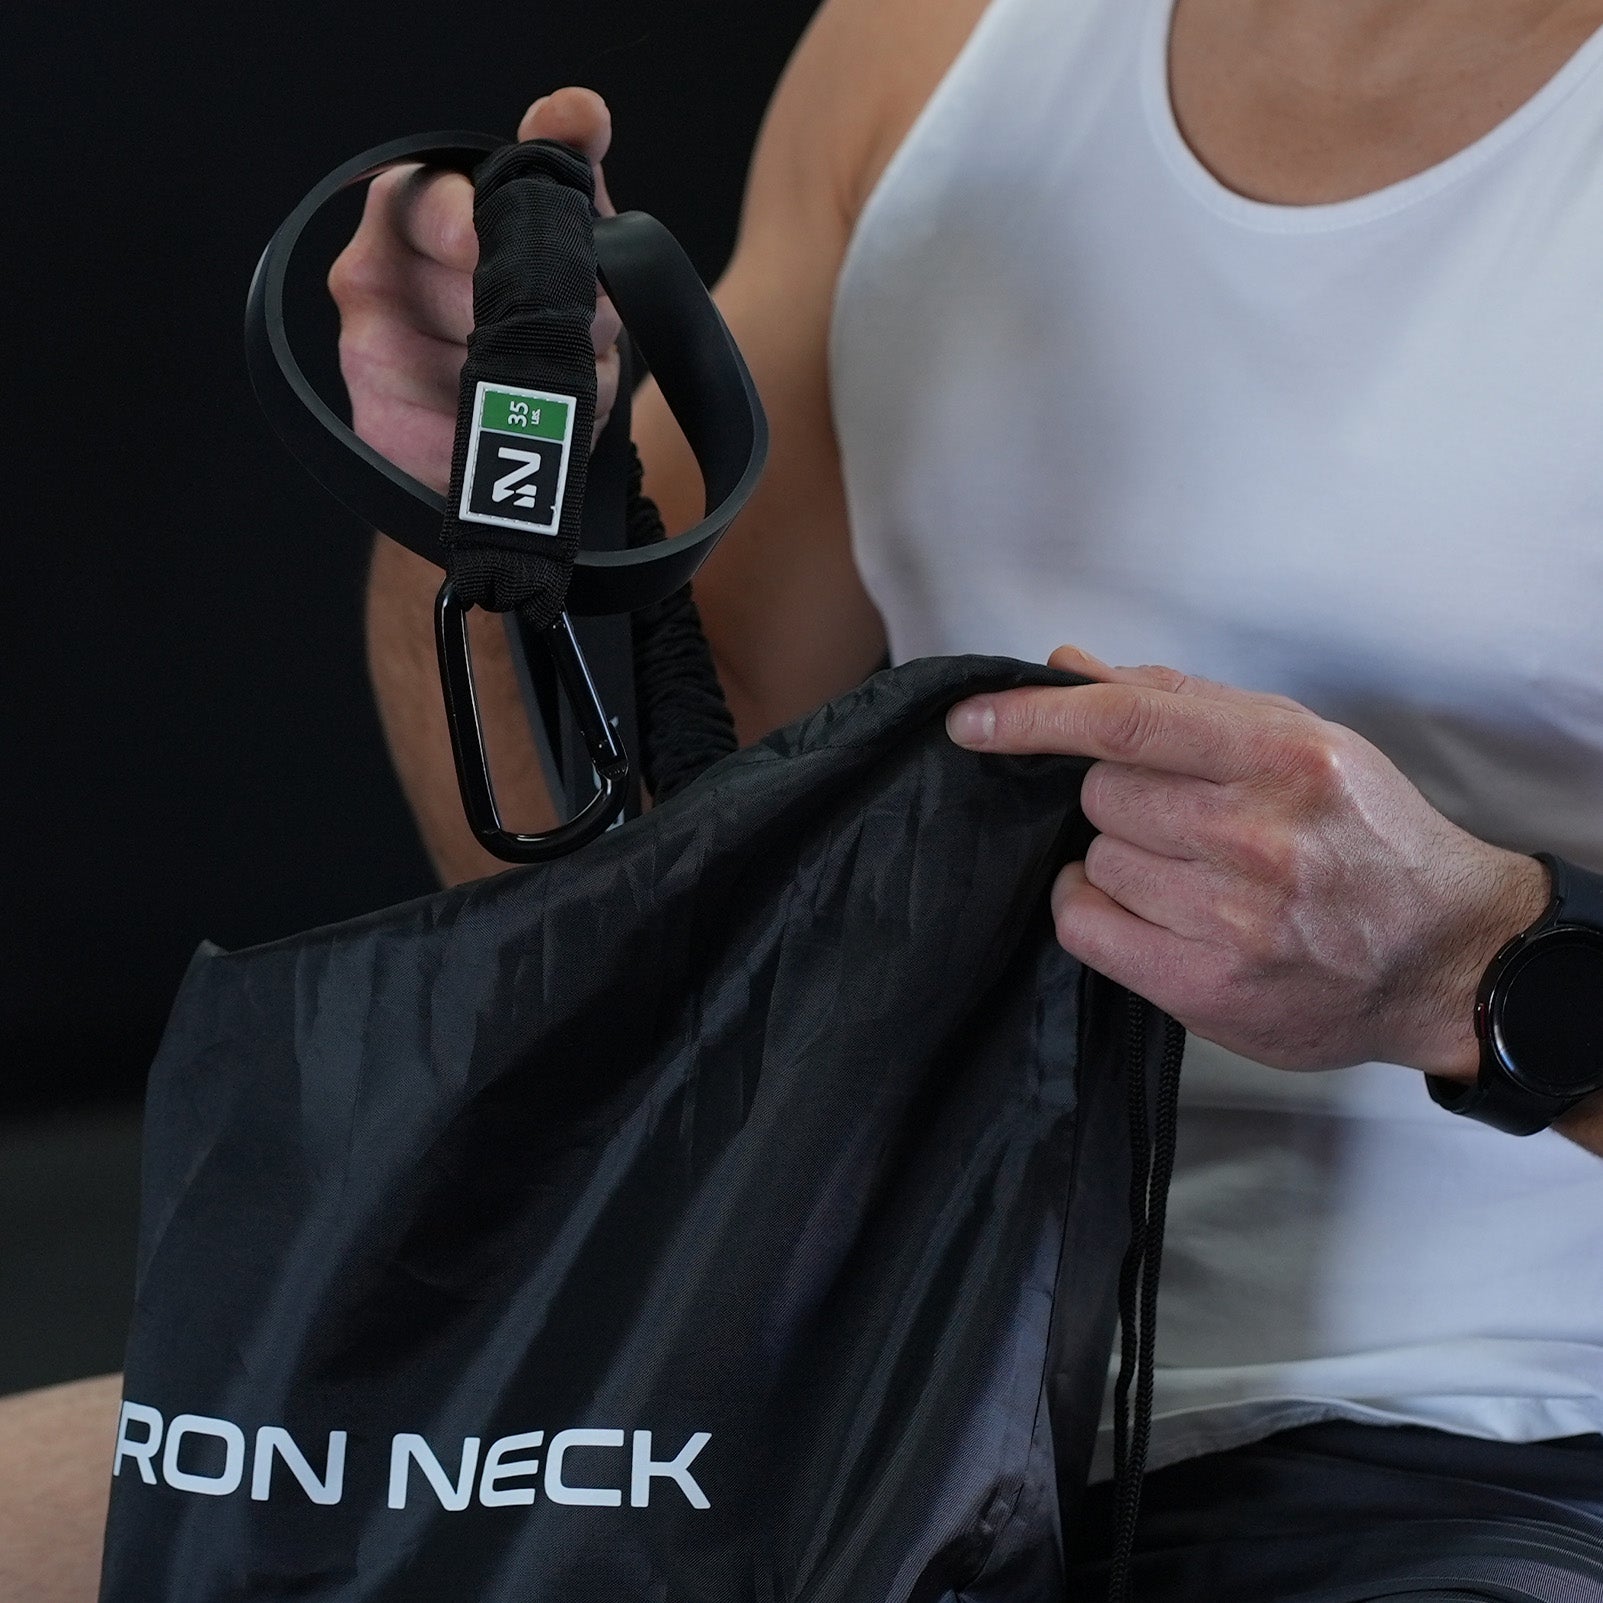 Harness Kit (Heavy) Accessories Iron Neck   